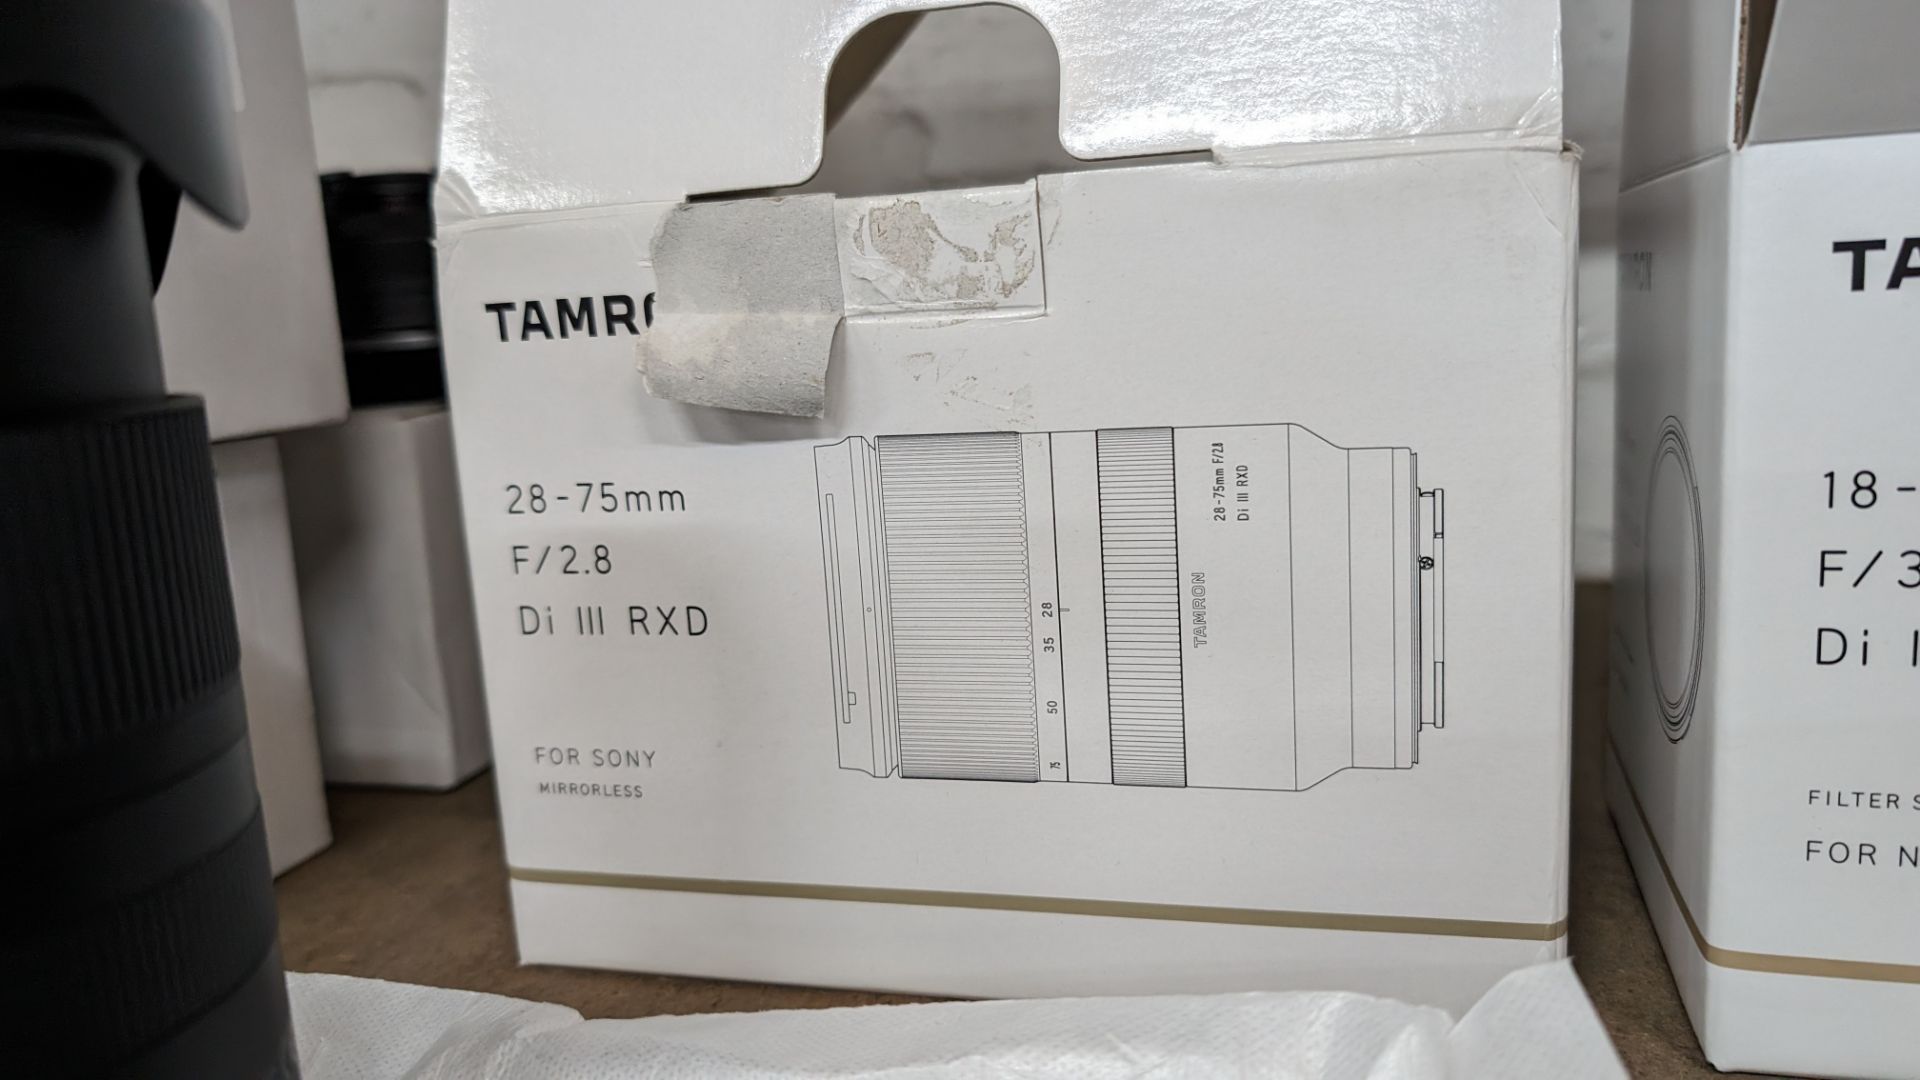 Tamron 28-75mm, lens, f/2.8, Di III RXD. For Sony Mirrorless - Bild 4 aus 7